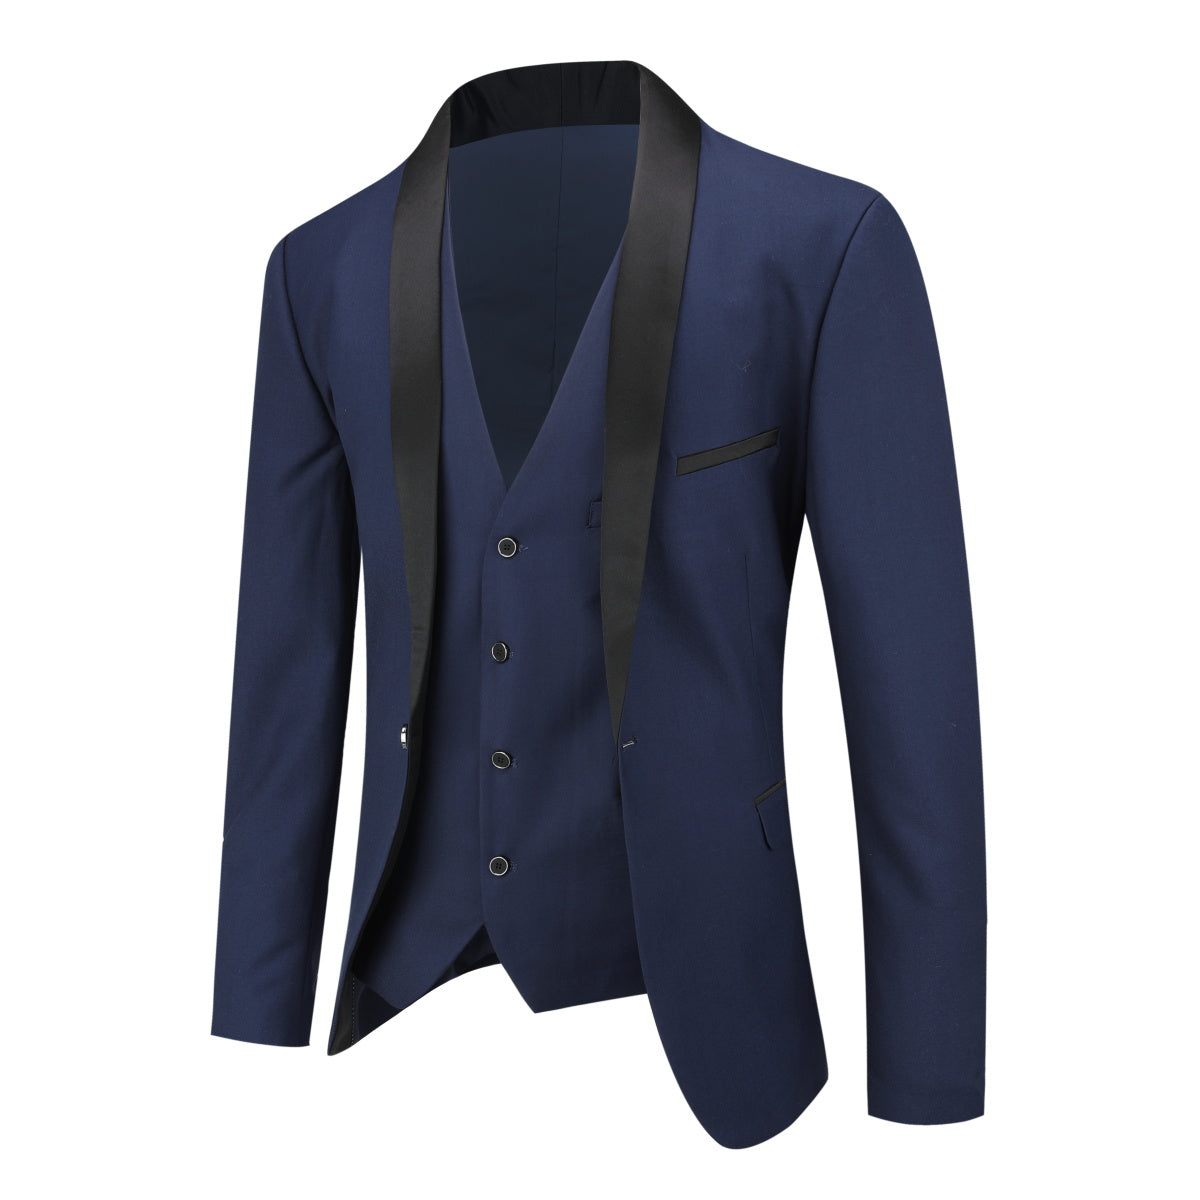 Slim Fit One Button Casual Blue 3-Piece Suit